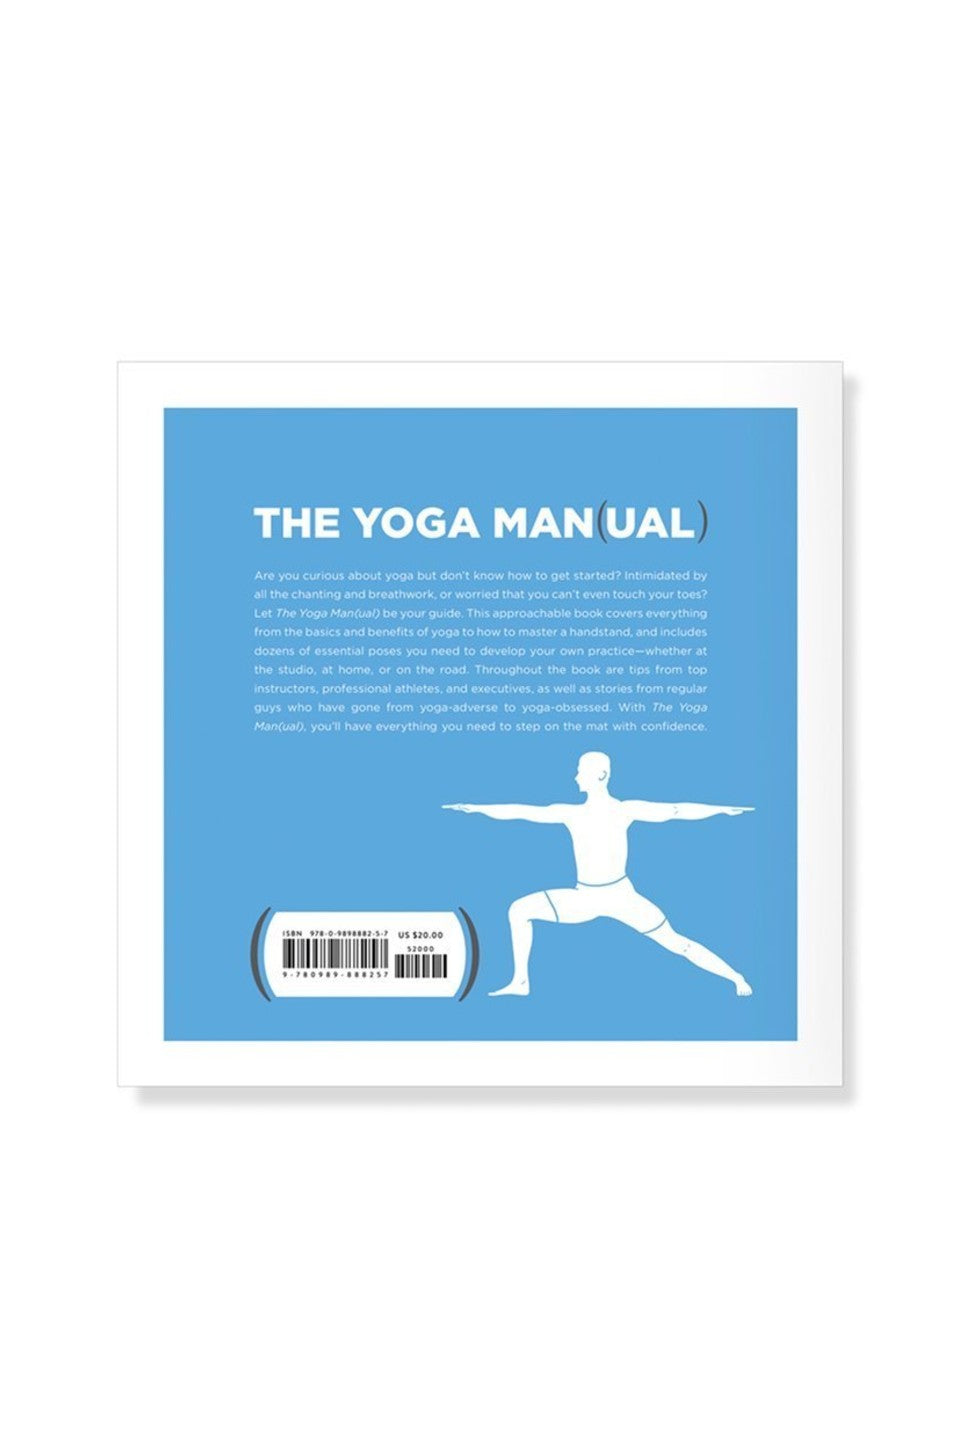 W&P - The Yoga Man(ual) - Back